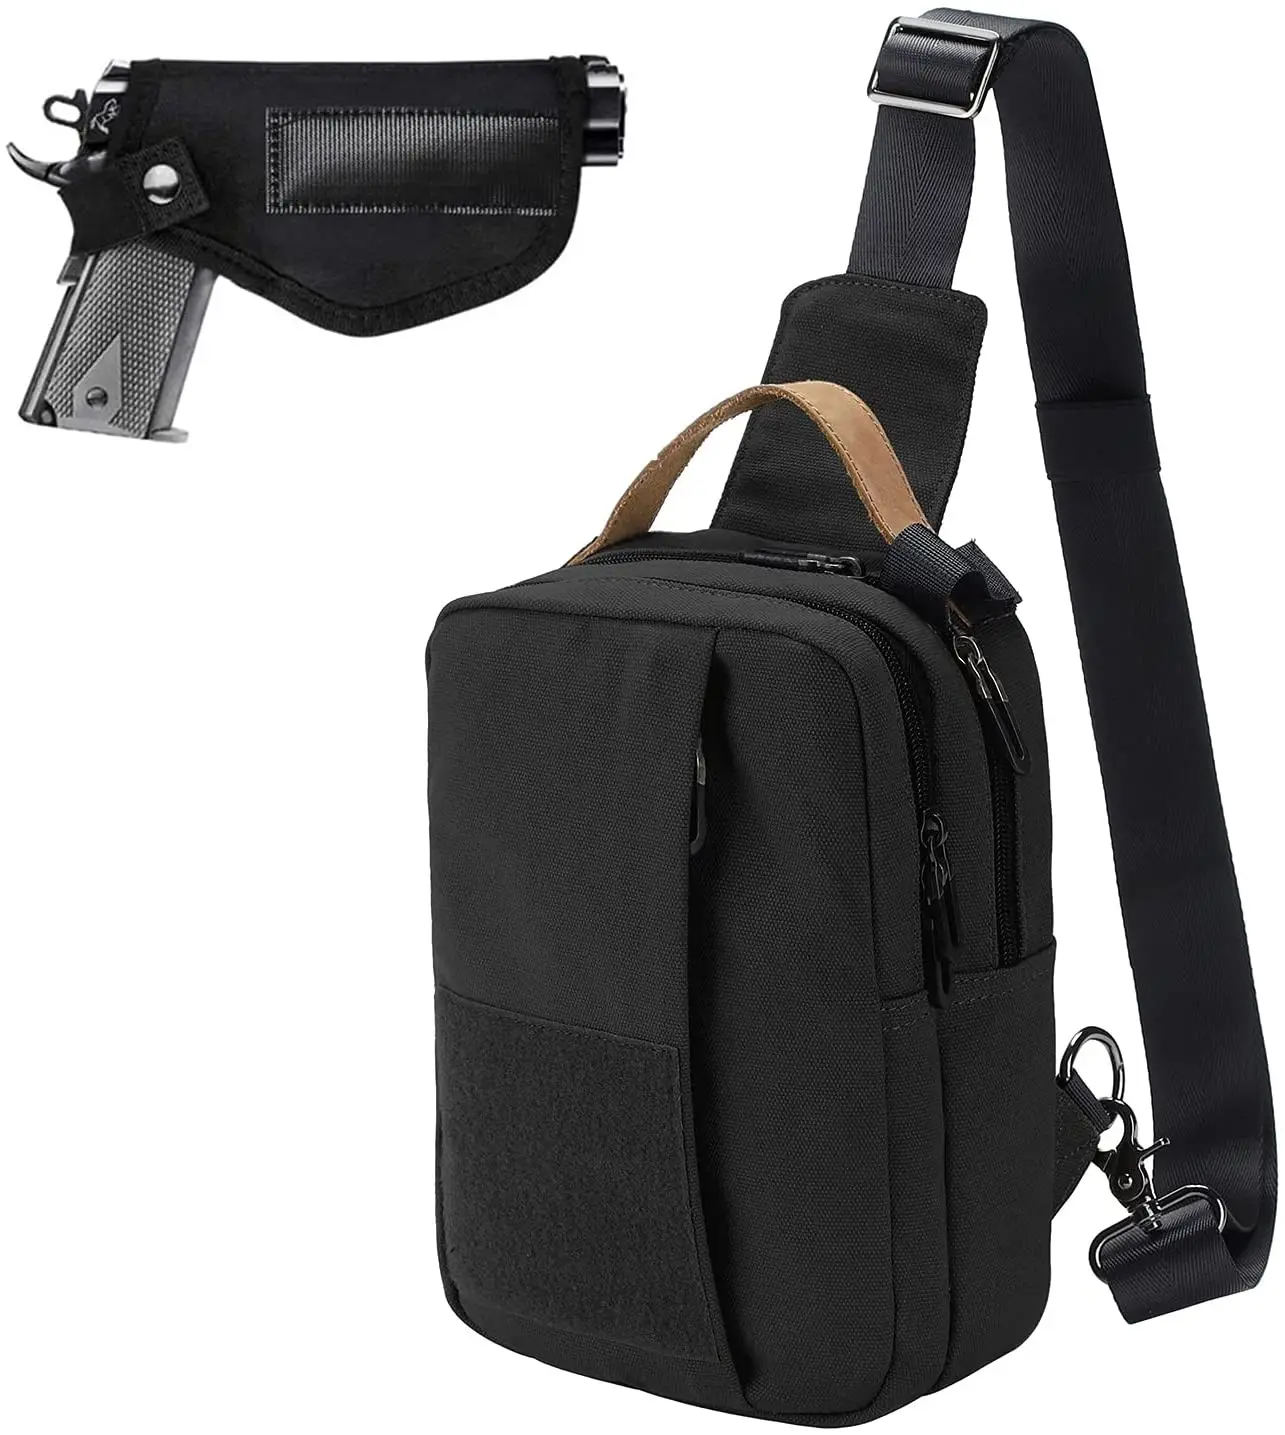 FREE SAMPLE Training Concealed Carry Sling Bag Holster Hand